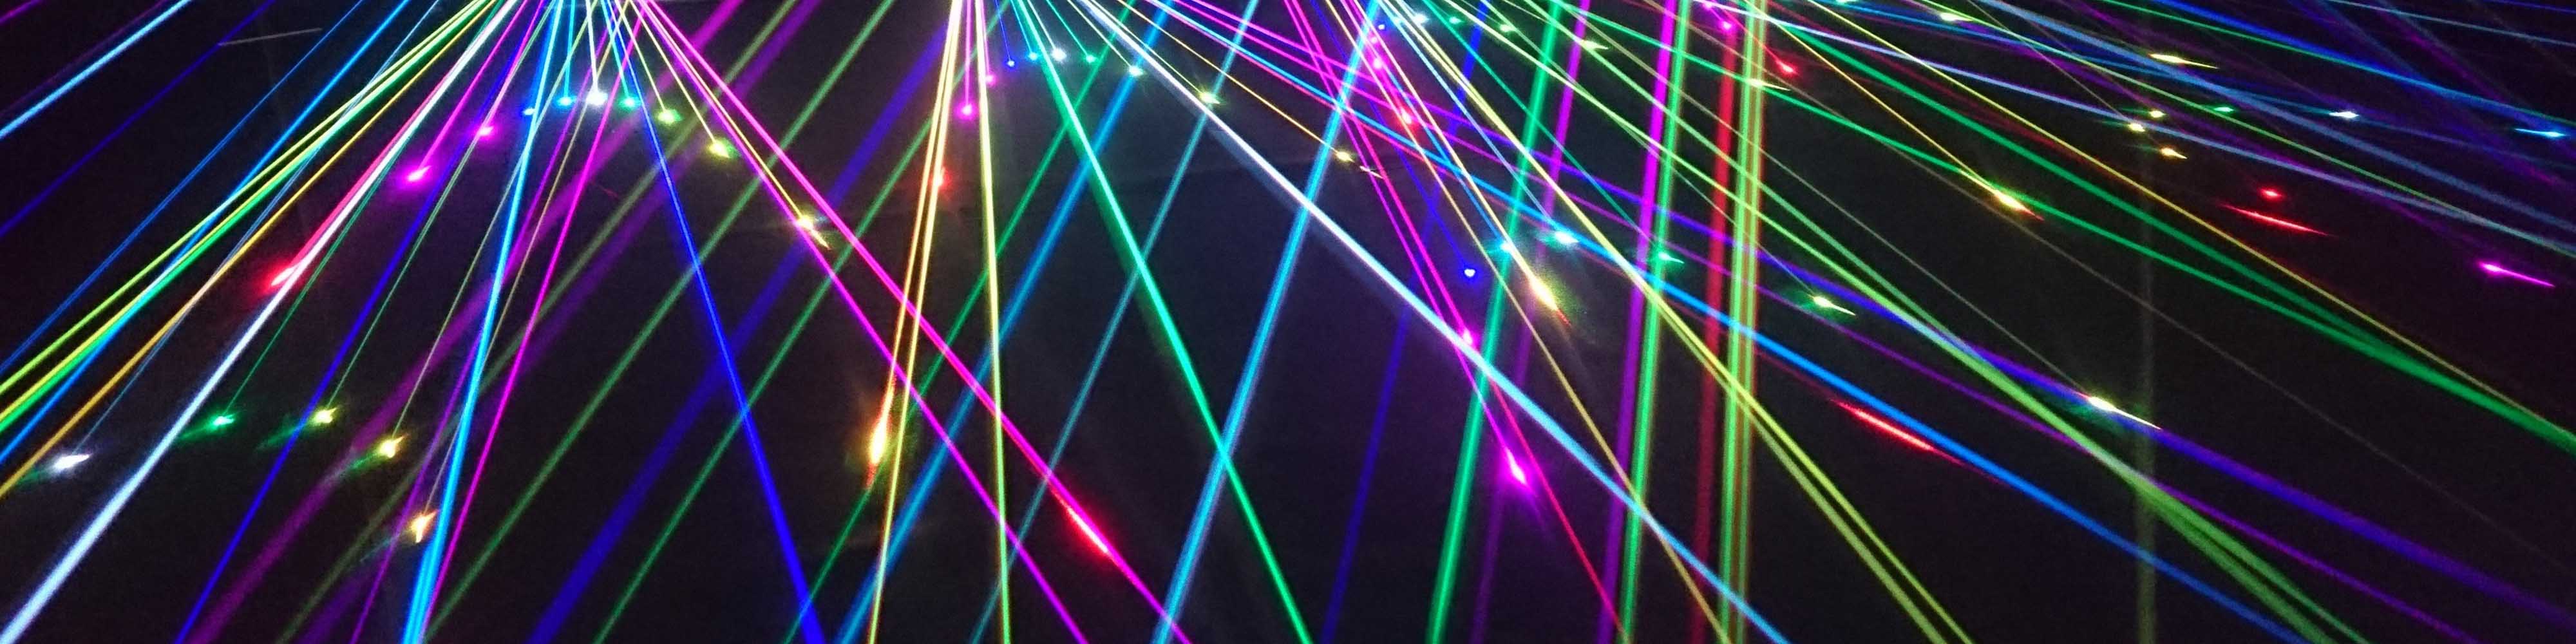 How do you focus regular light to make it a laser beam?